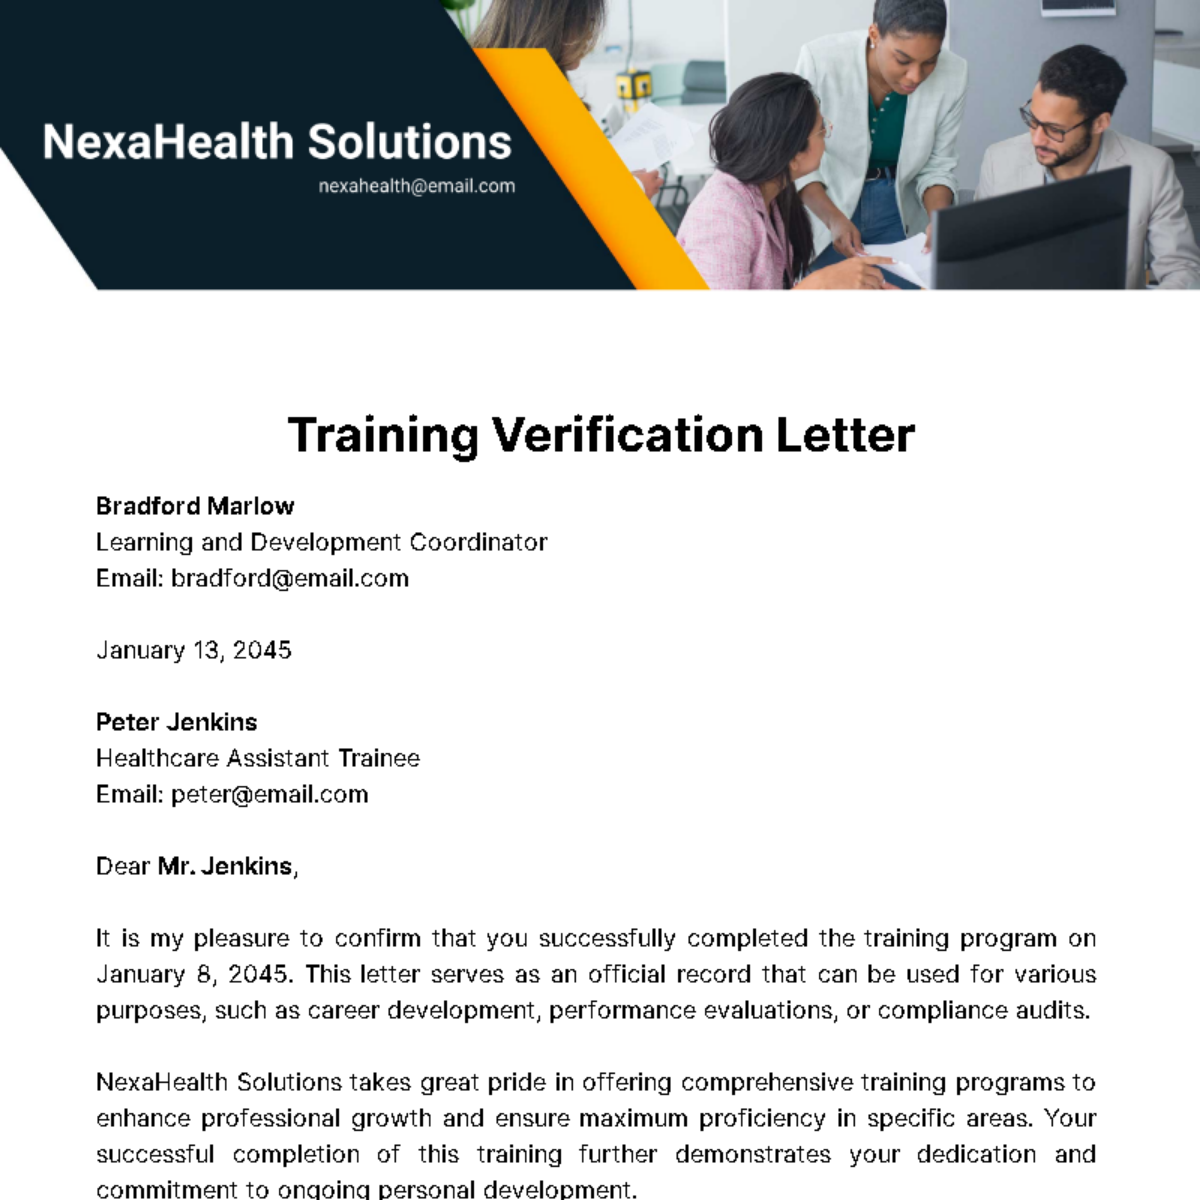 Training Verification Letter Template